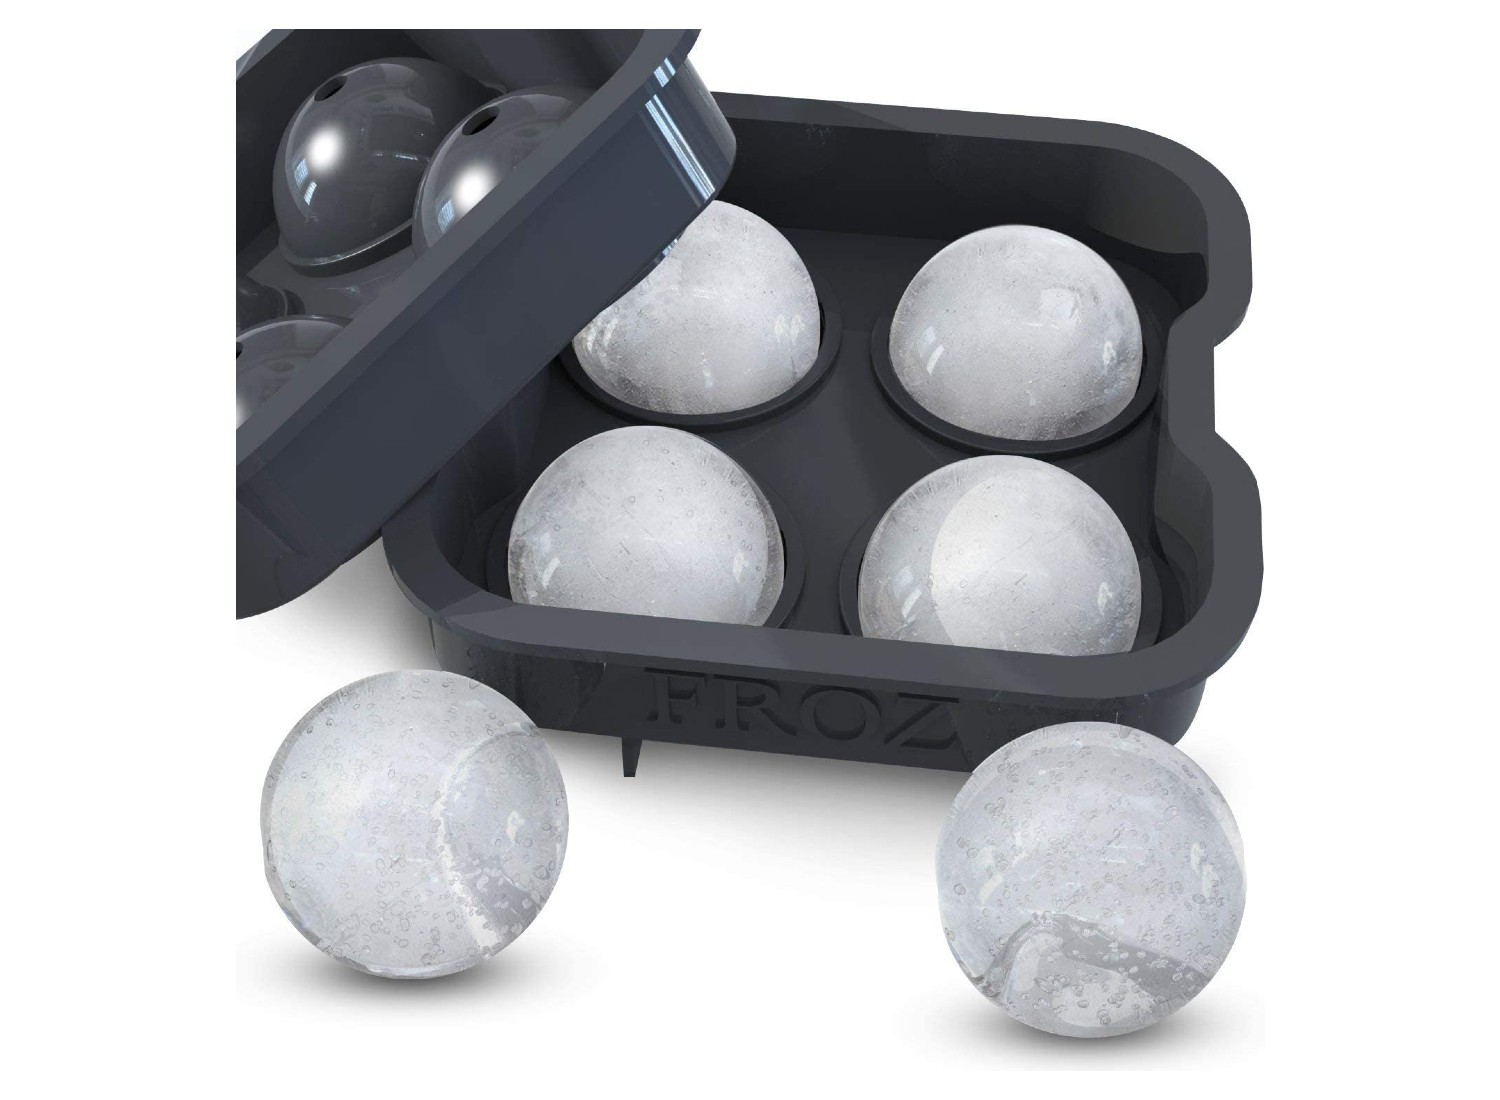 Glacio Ice Sphere Molds - Bourbon Culture